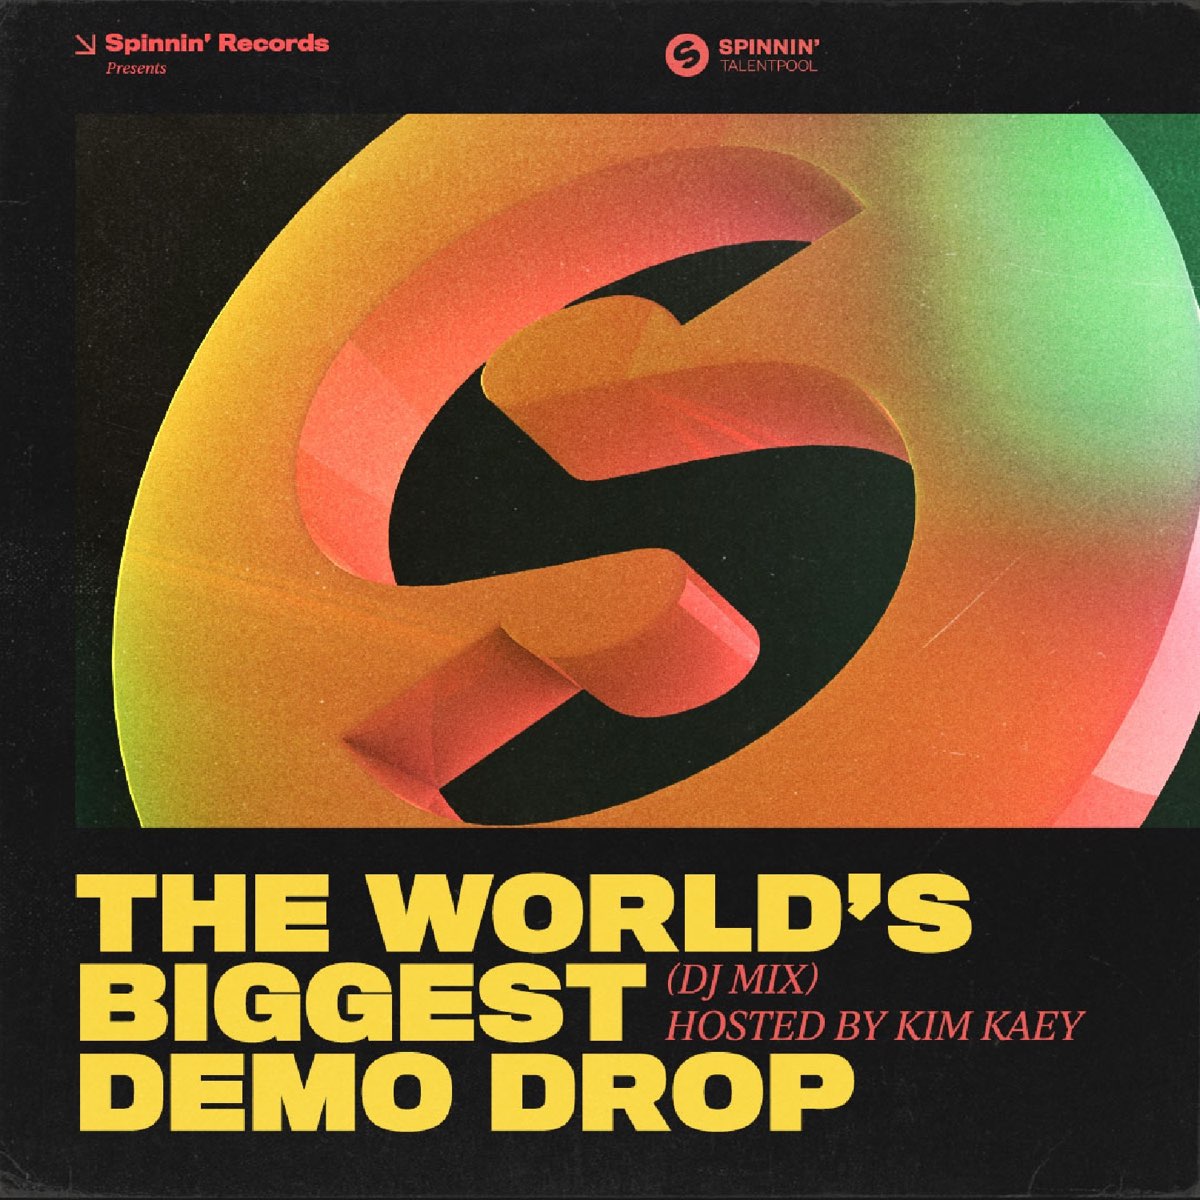 Spinnin' Records Presents: The World's Biggest Demo Drop (DJ Mix